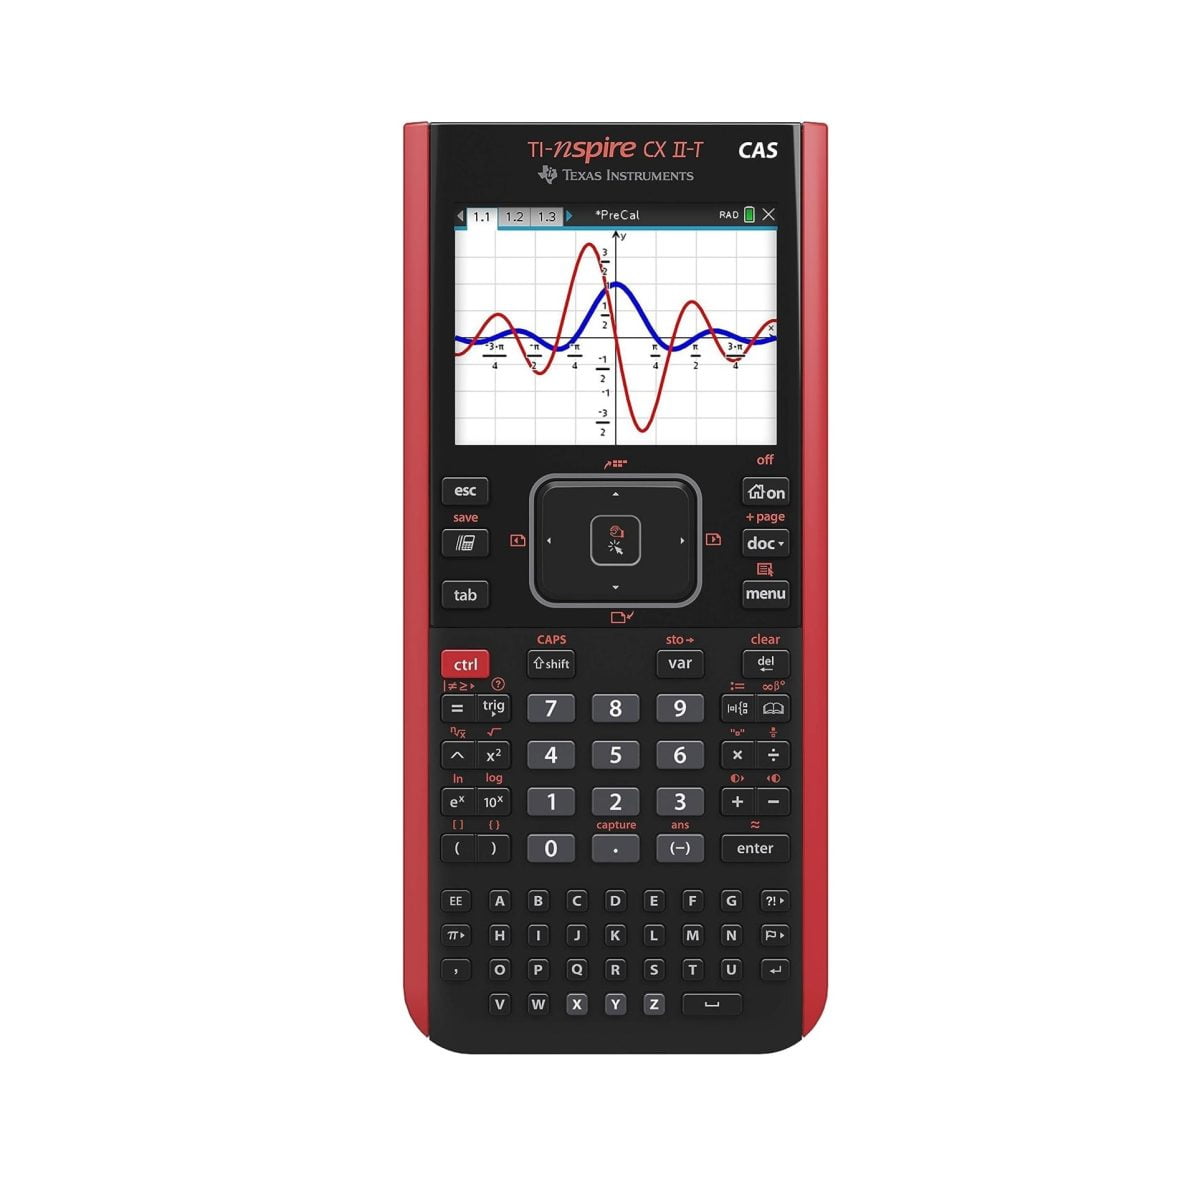 Texas Instruments New Ti-Nspire Cx Ii-T Cas - Formal Graphic Calculator - Exam Mode